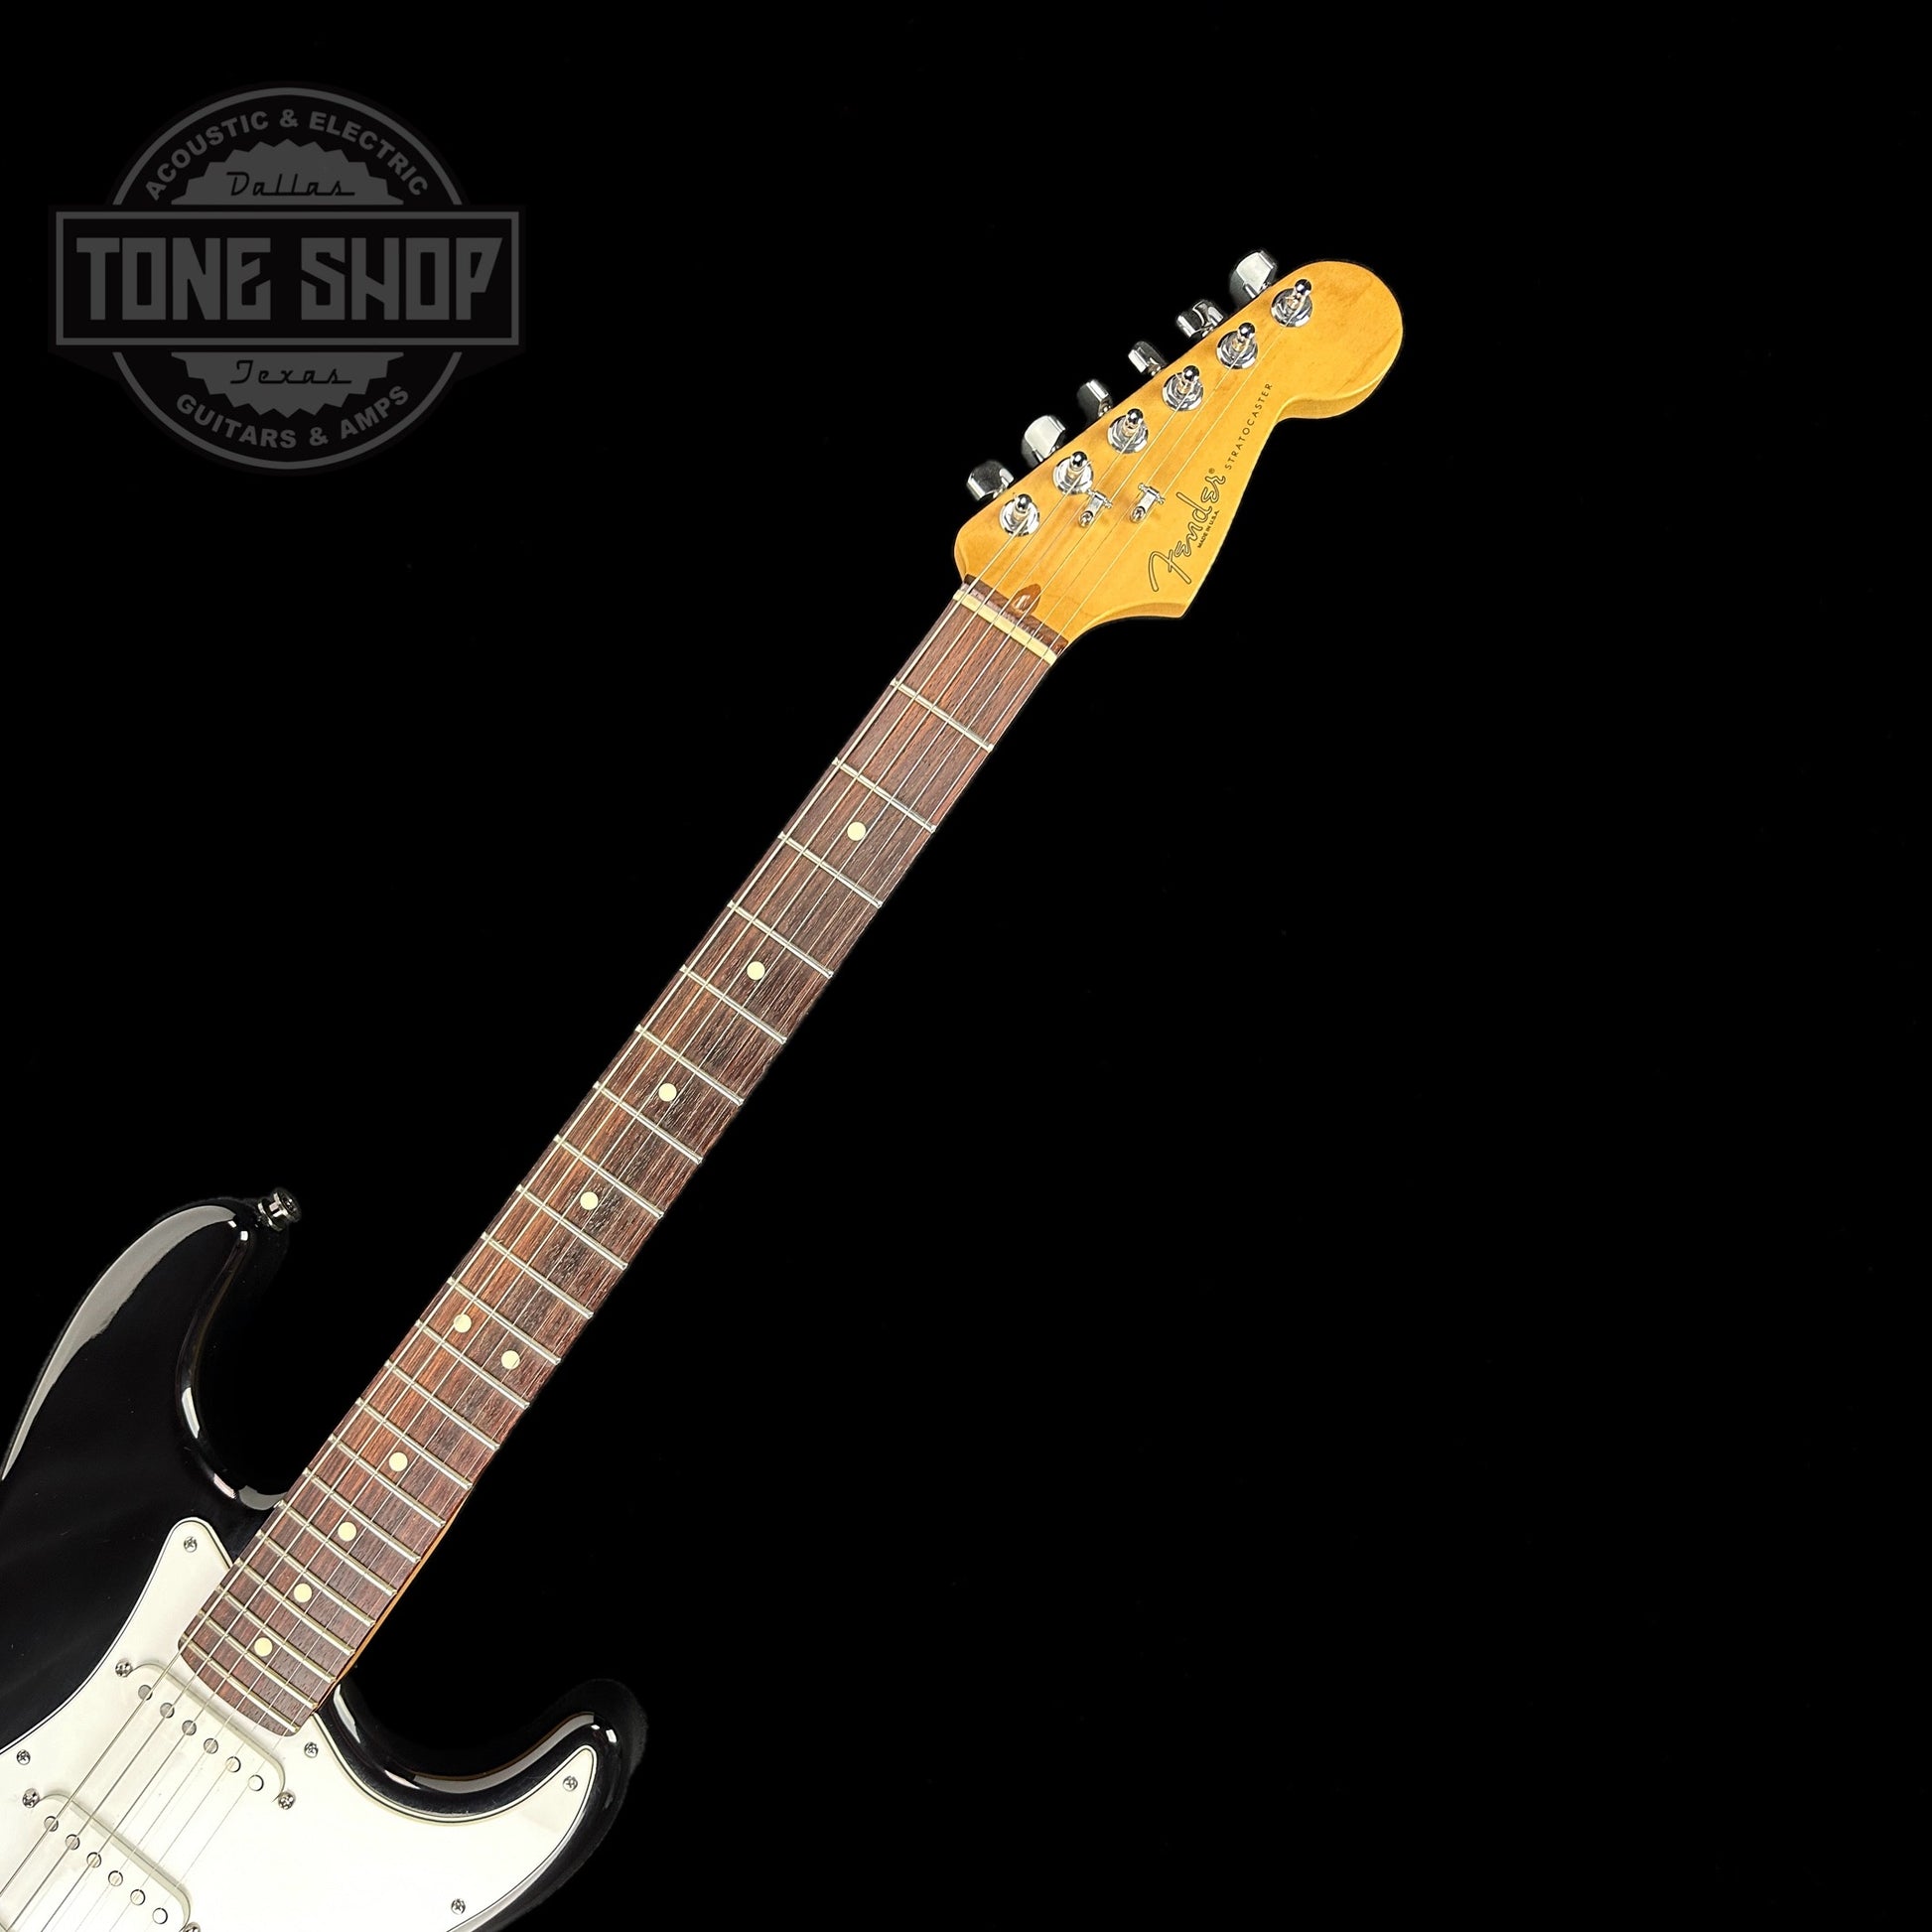 Fretboard of Used 1999 Fender American Standard Strat Black.